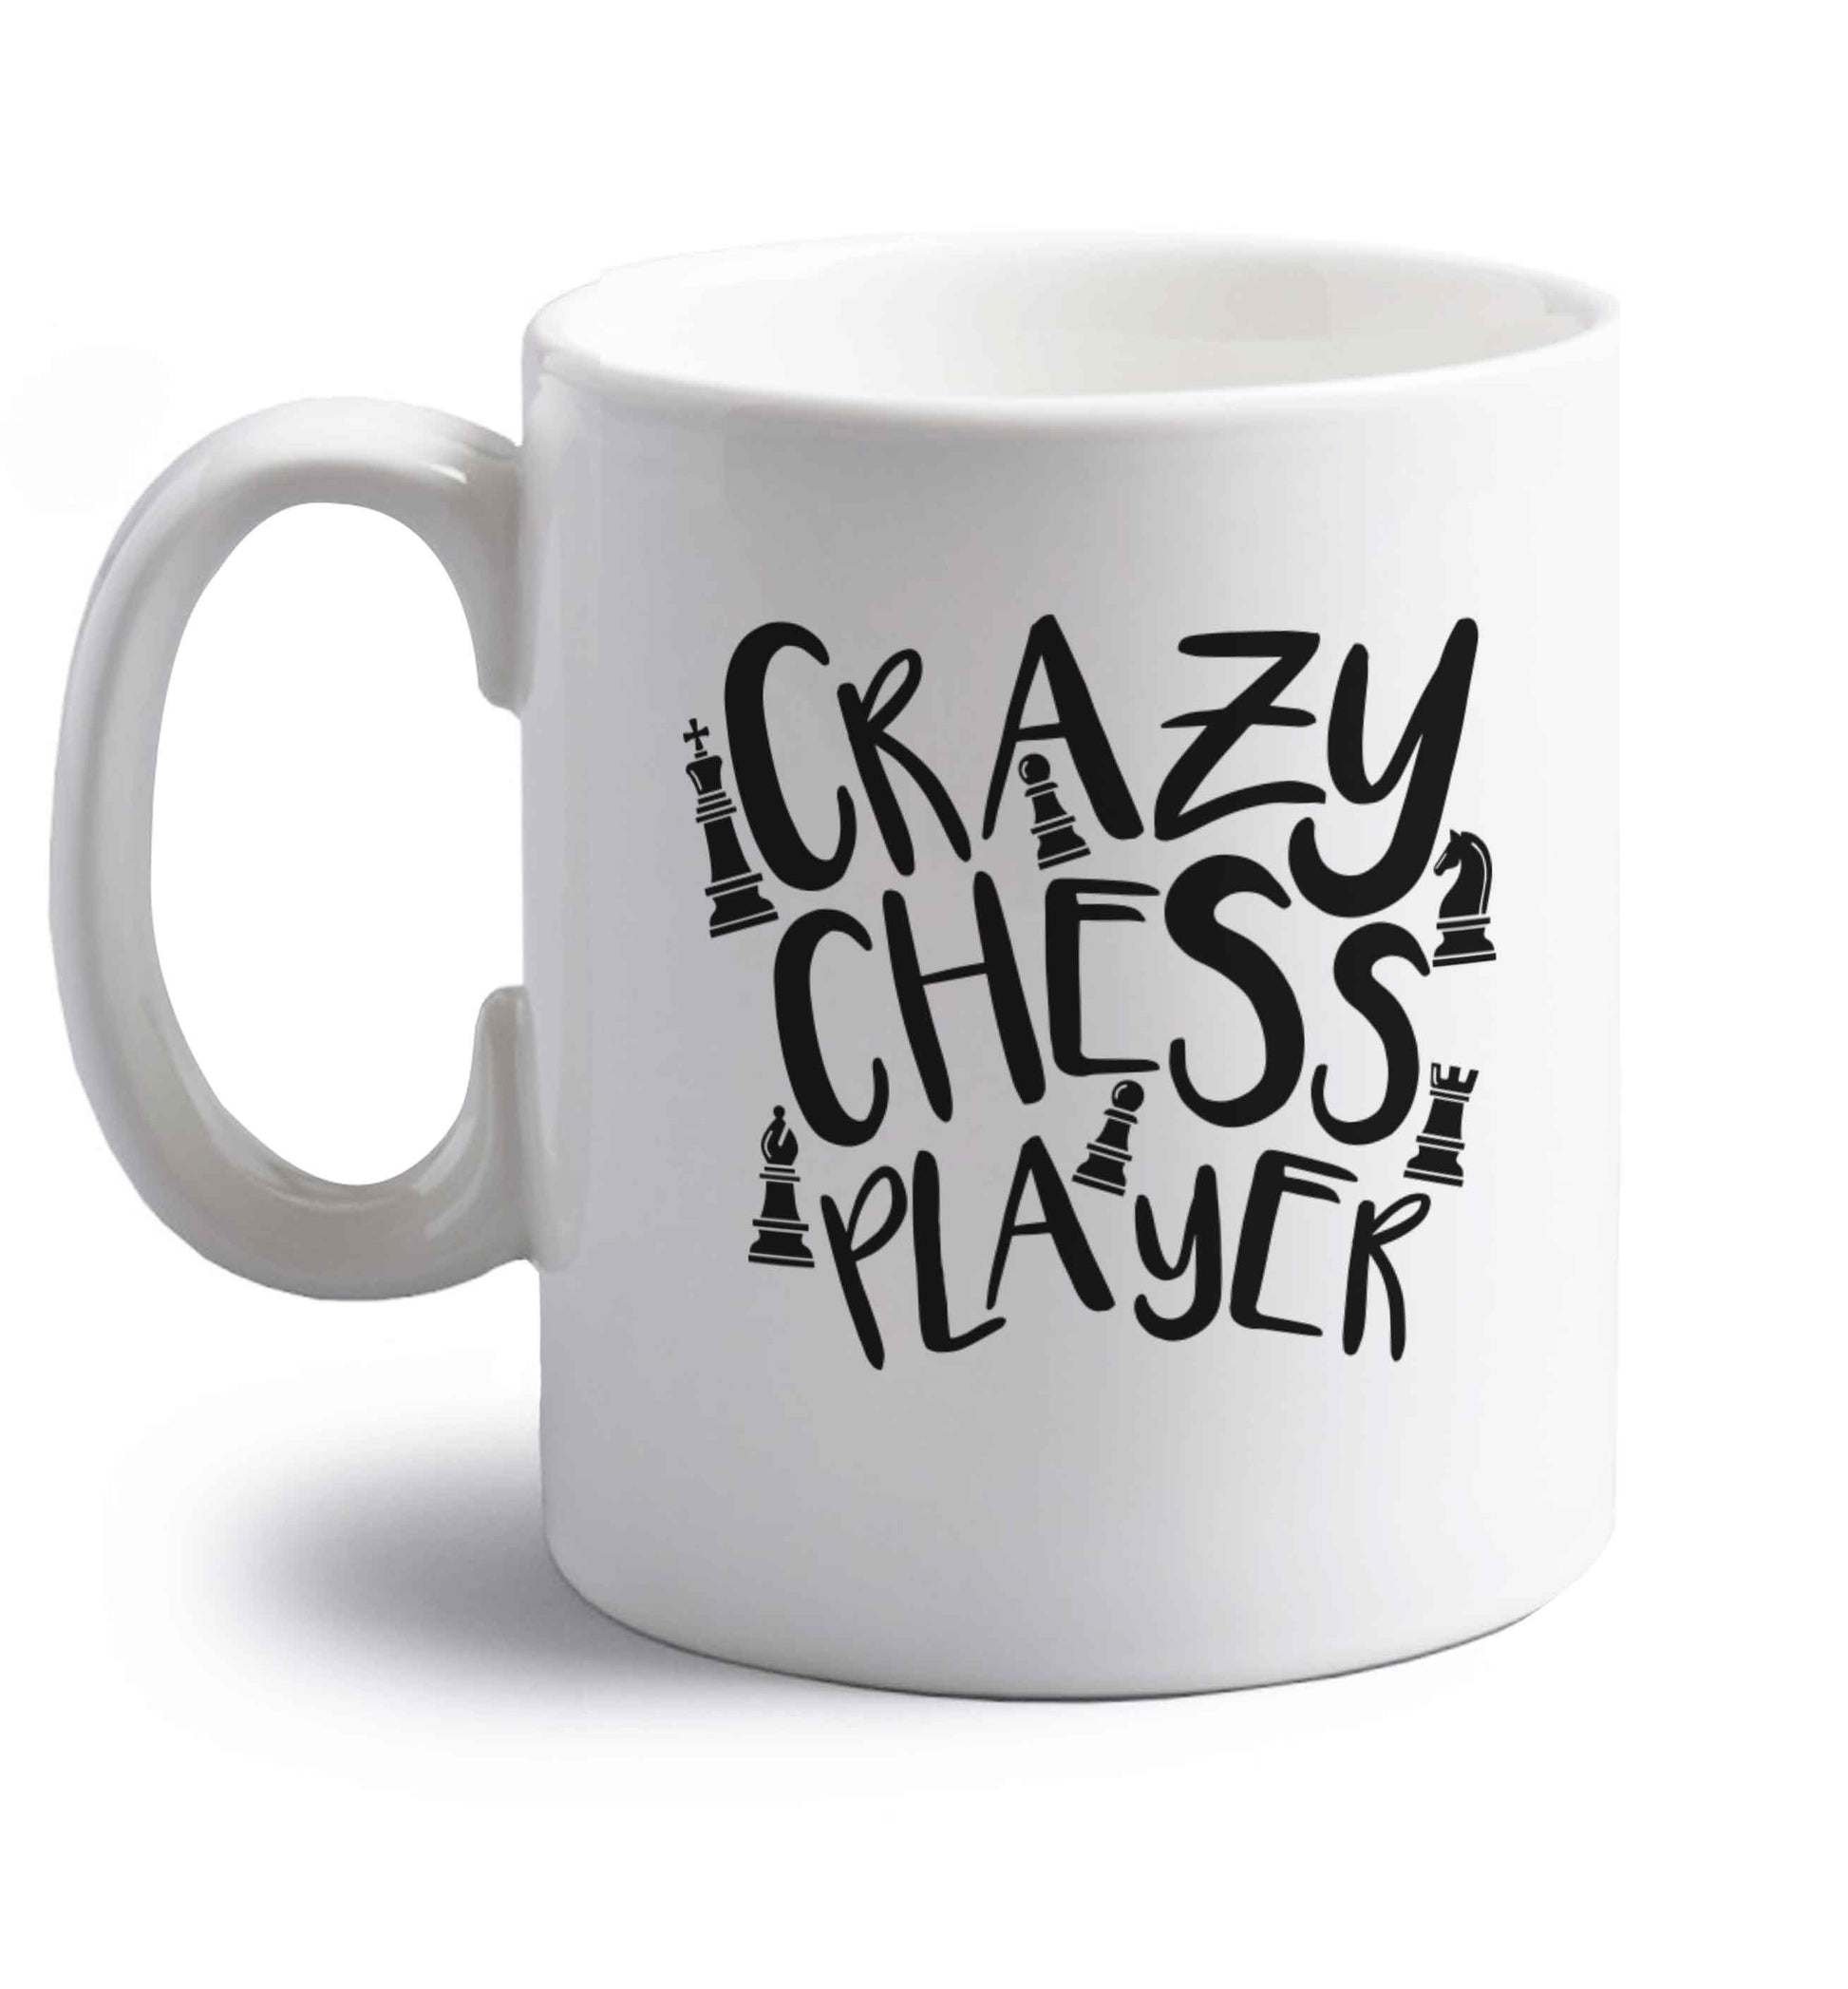 Crazy chess player right handed white ceramic mug 